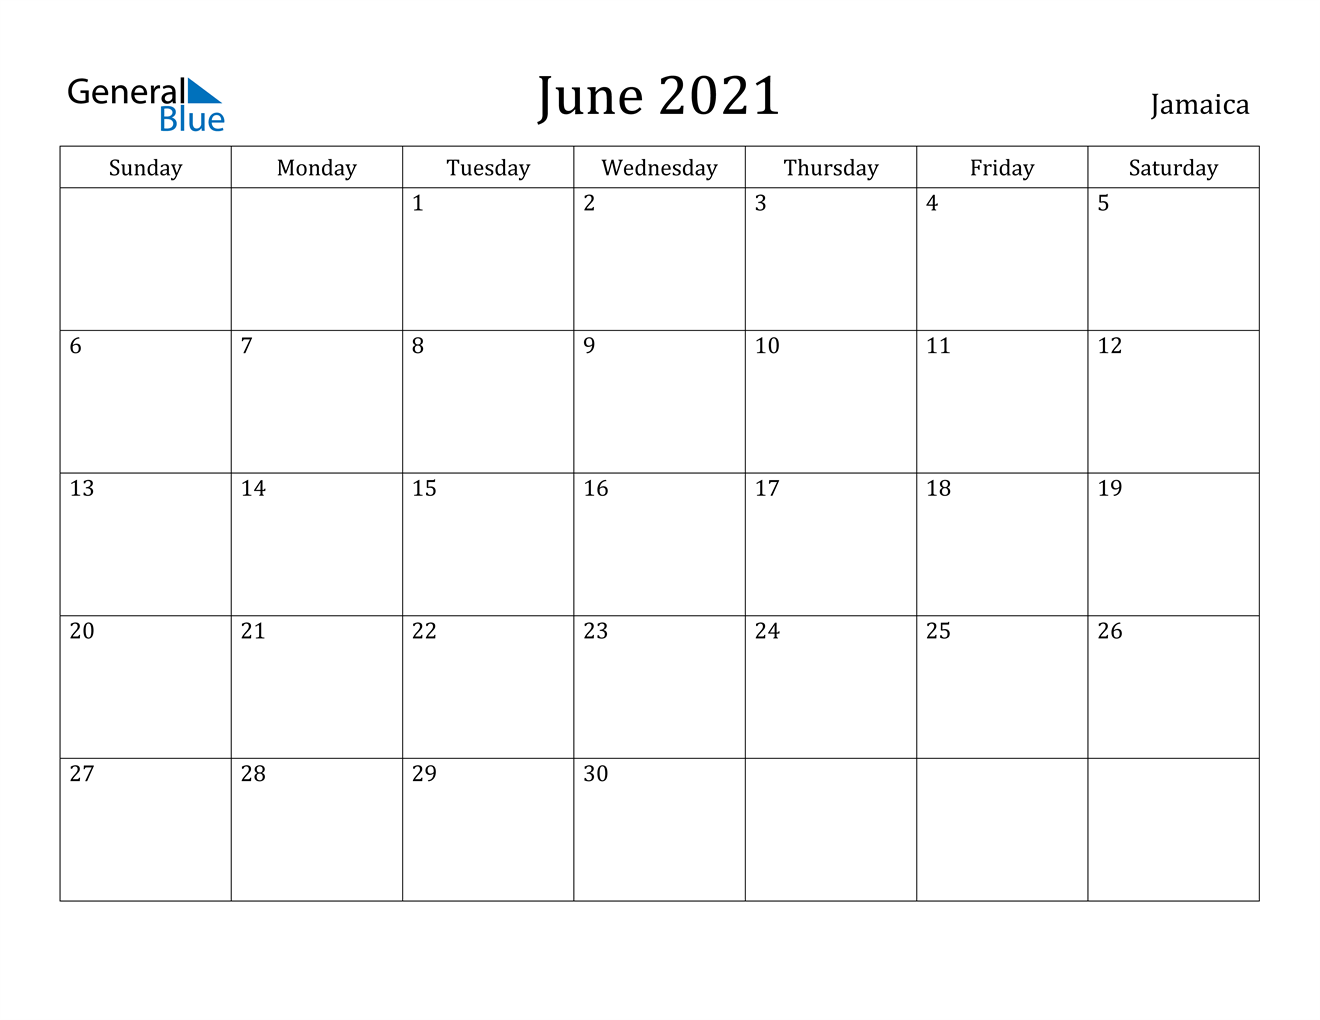 June 2021 Calendar Jamaica